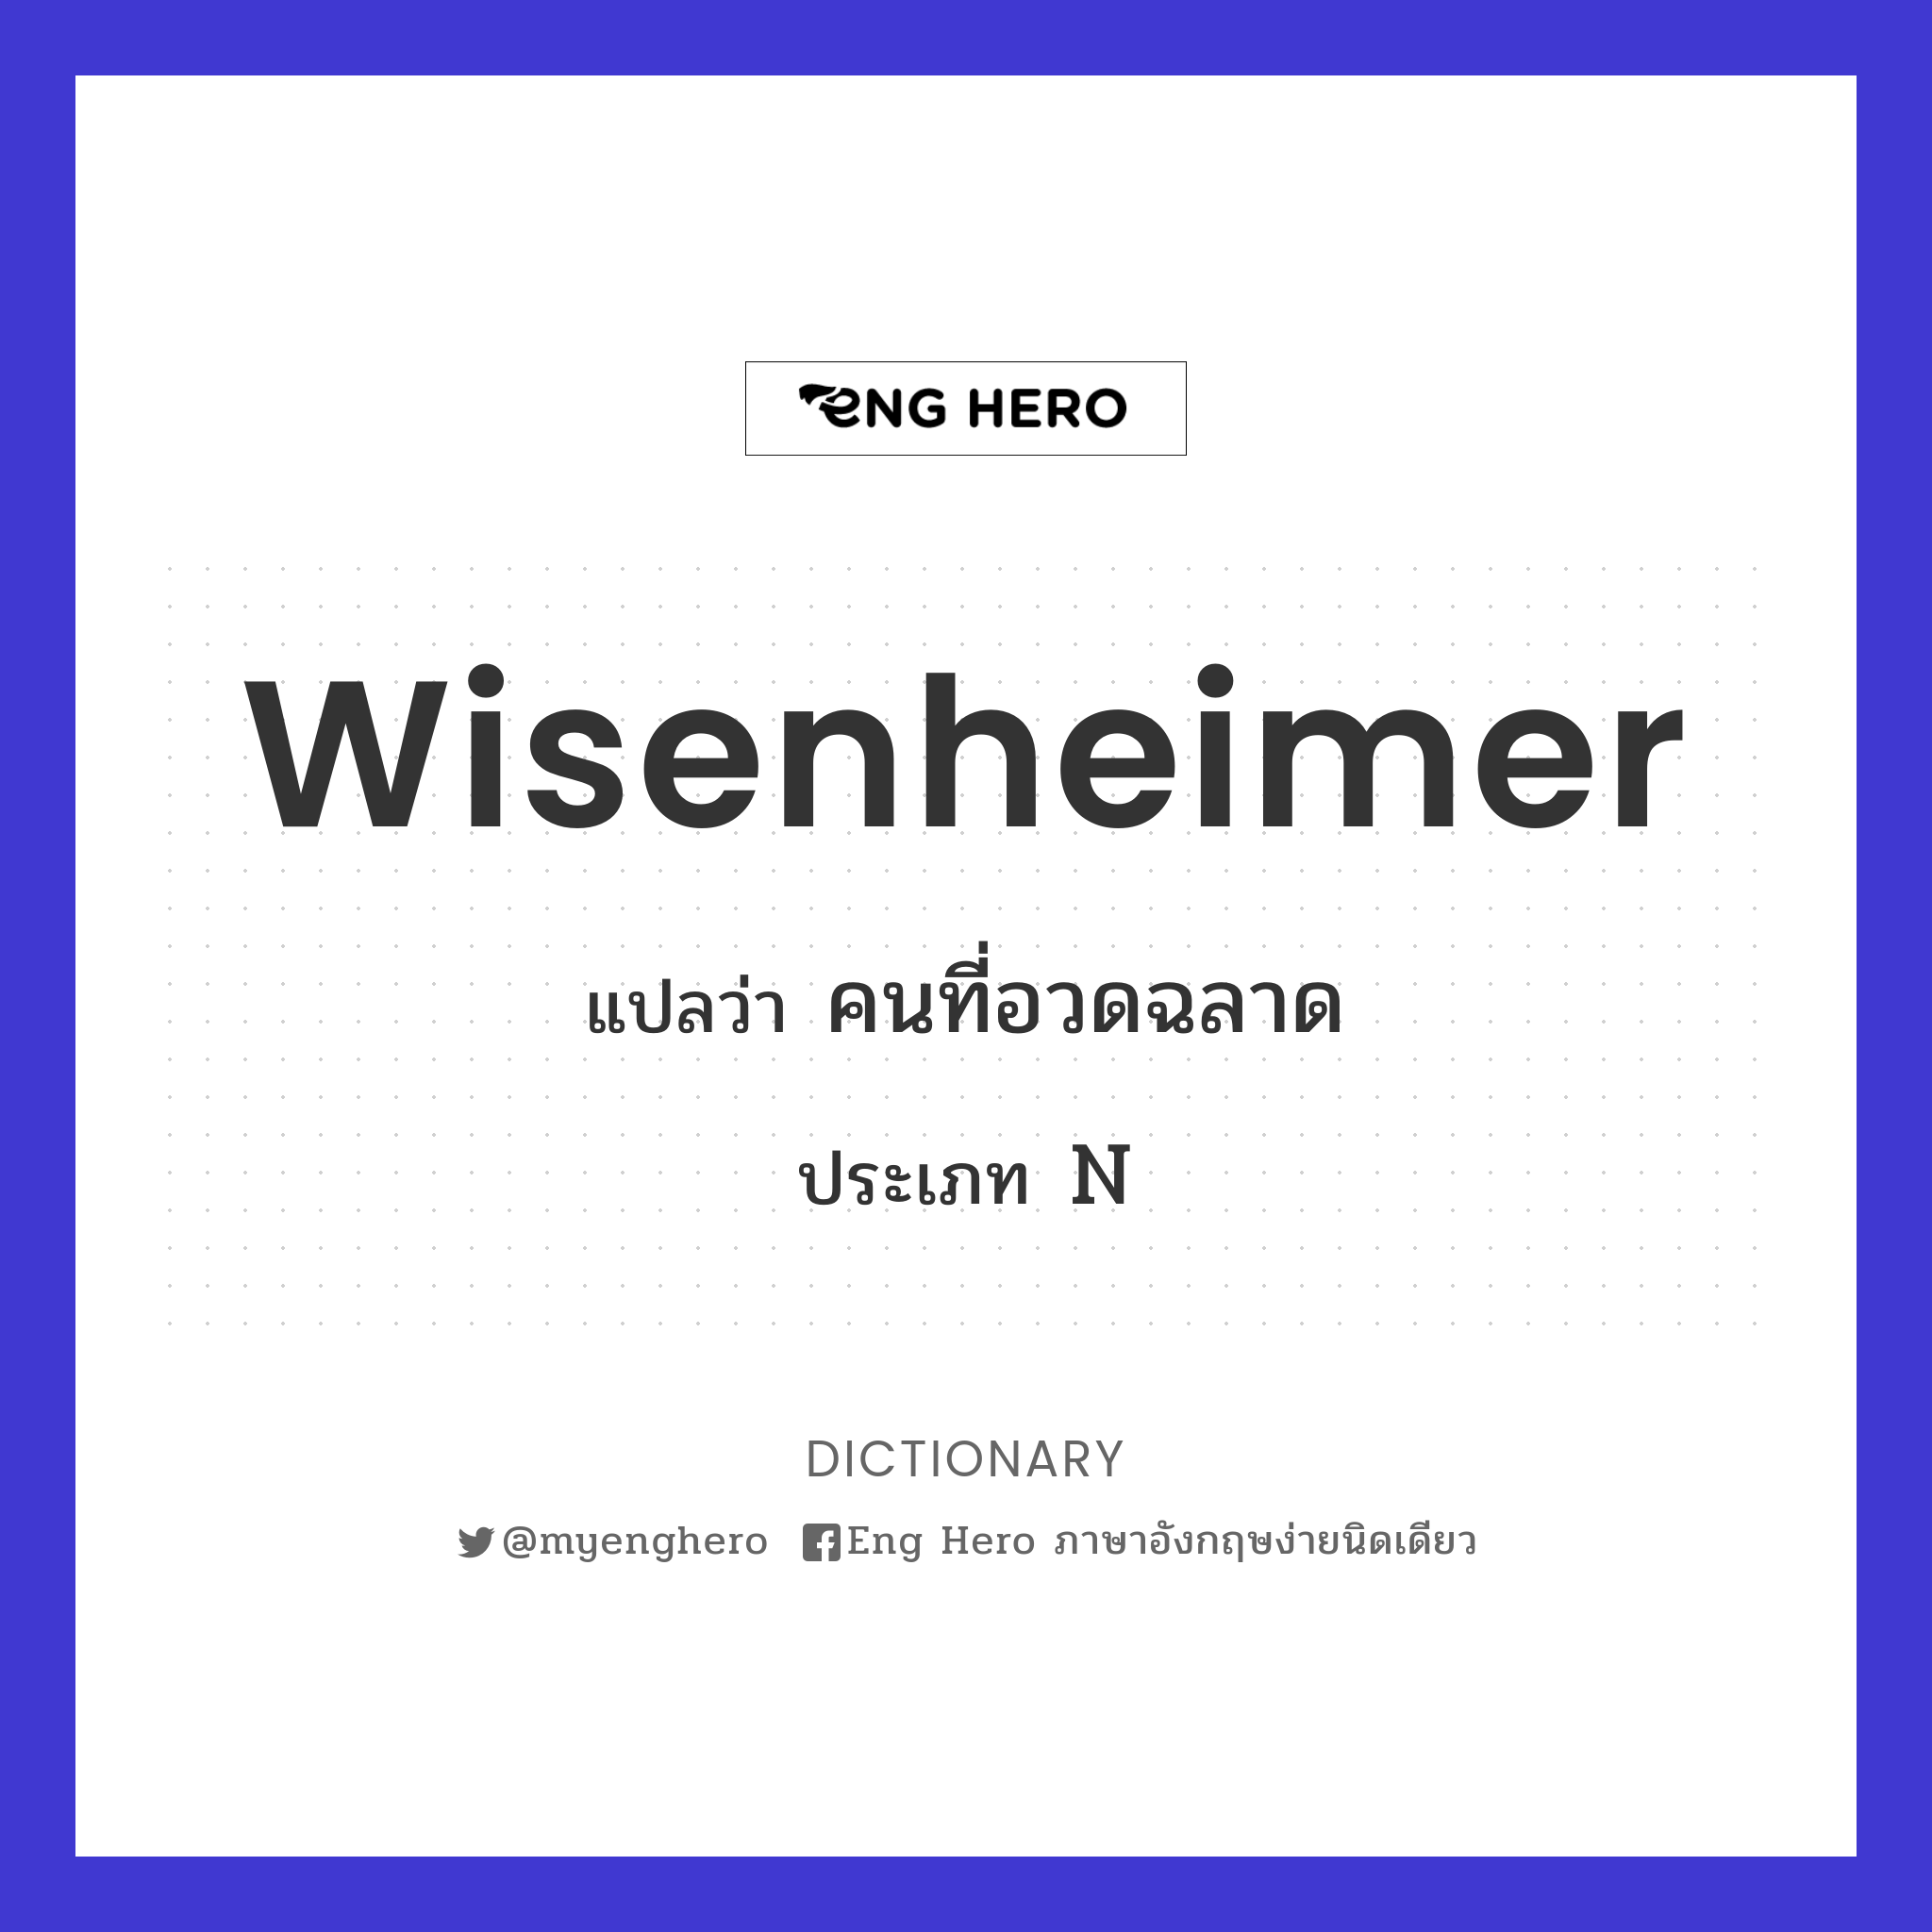 wisenheimer